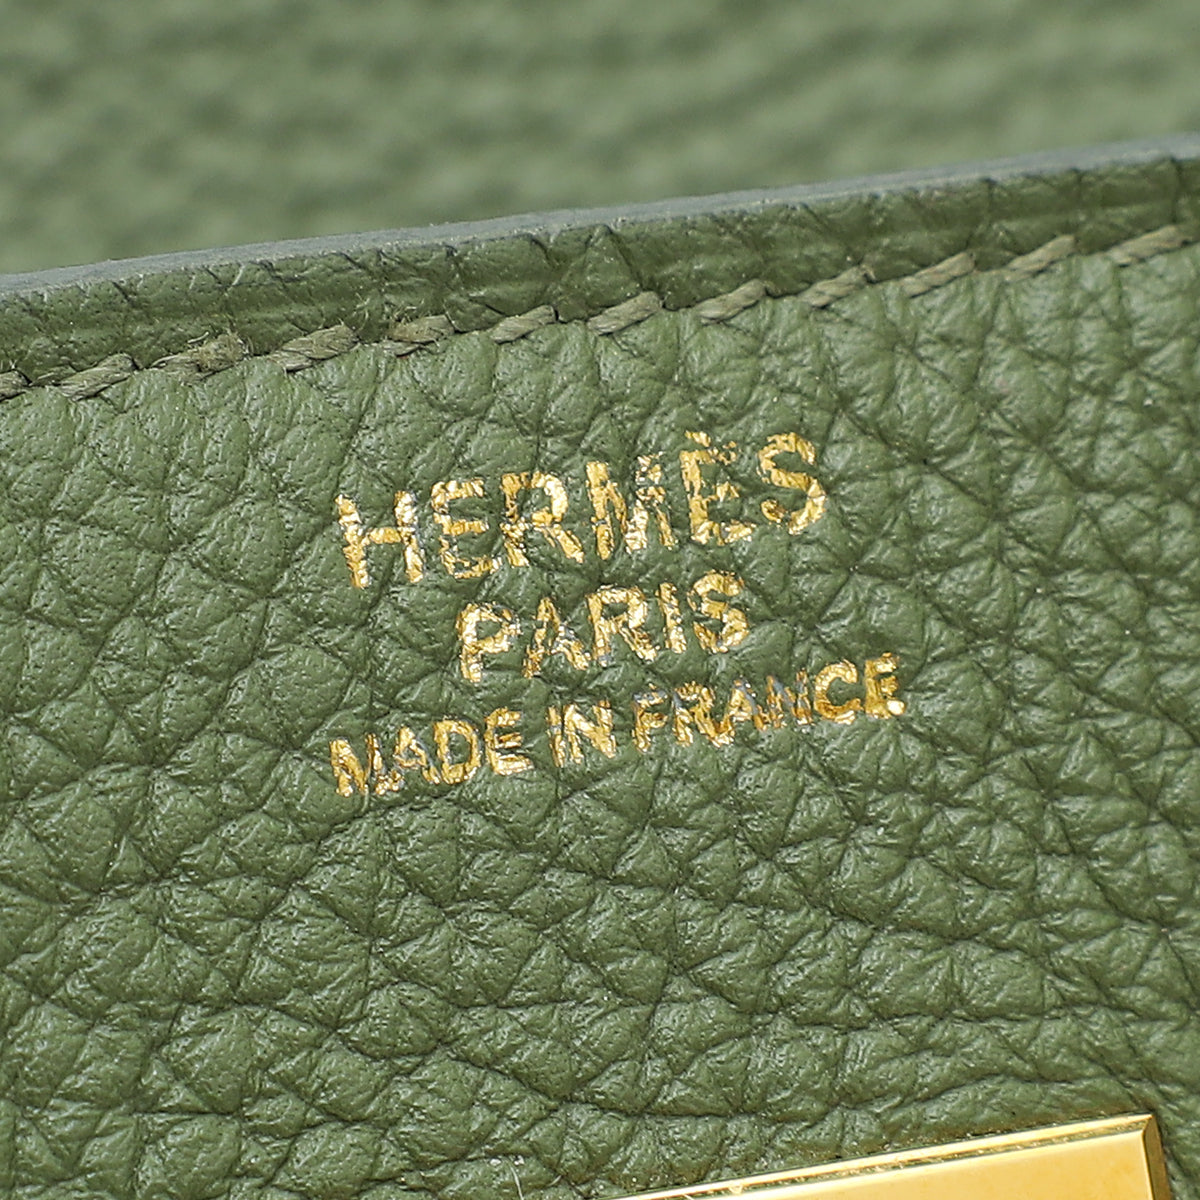 Hermes Vert Olive Birkin 30 Bag